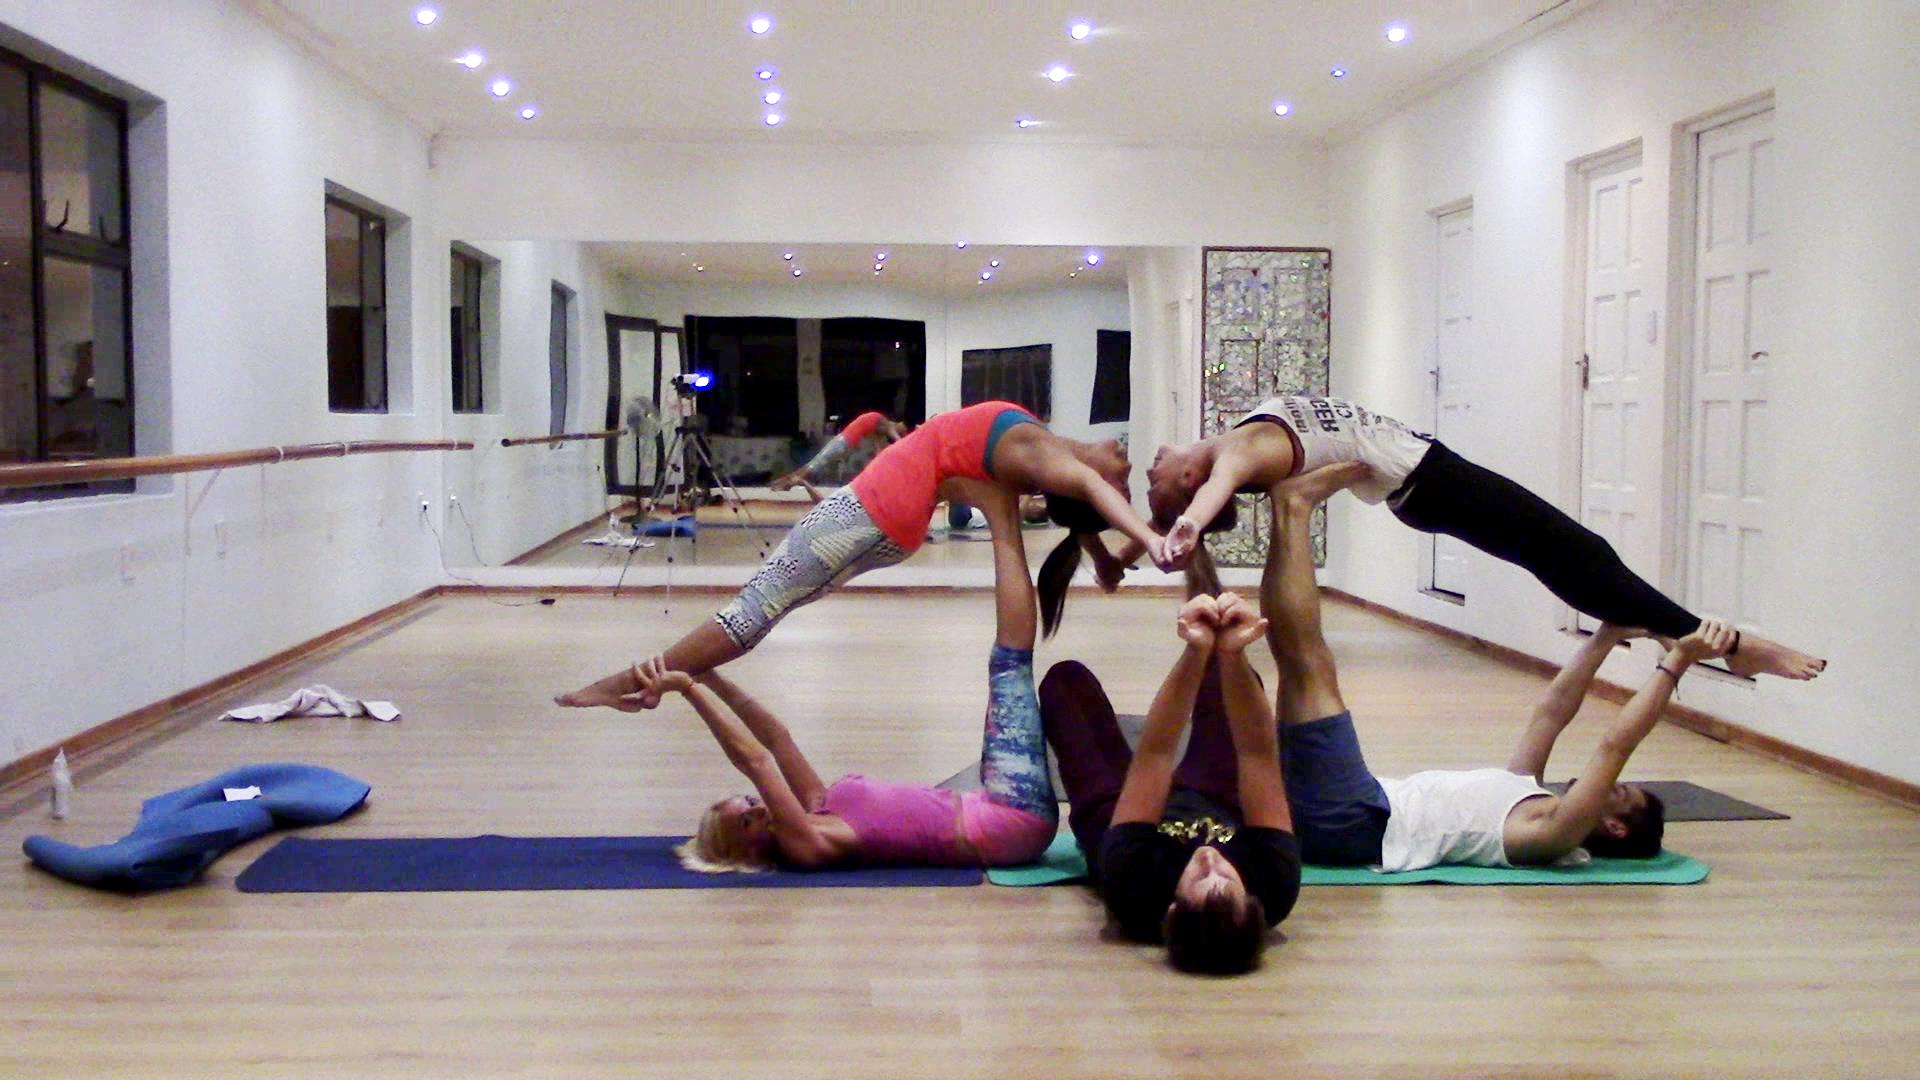 The Art of Movement - dance, yoga and fitness studio